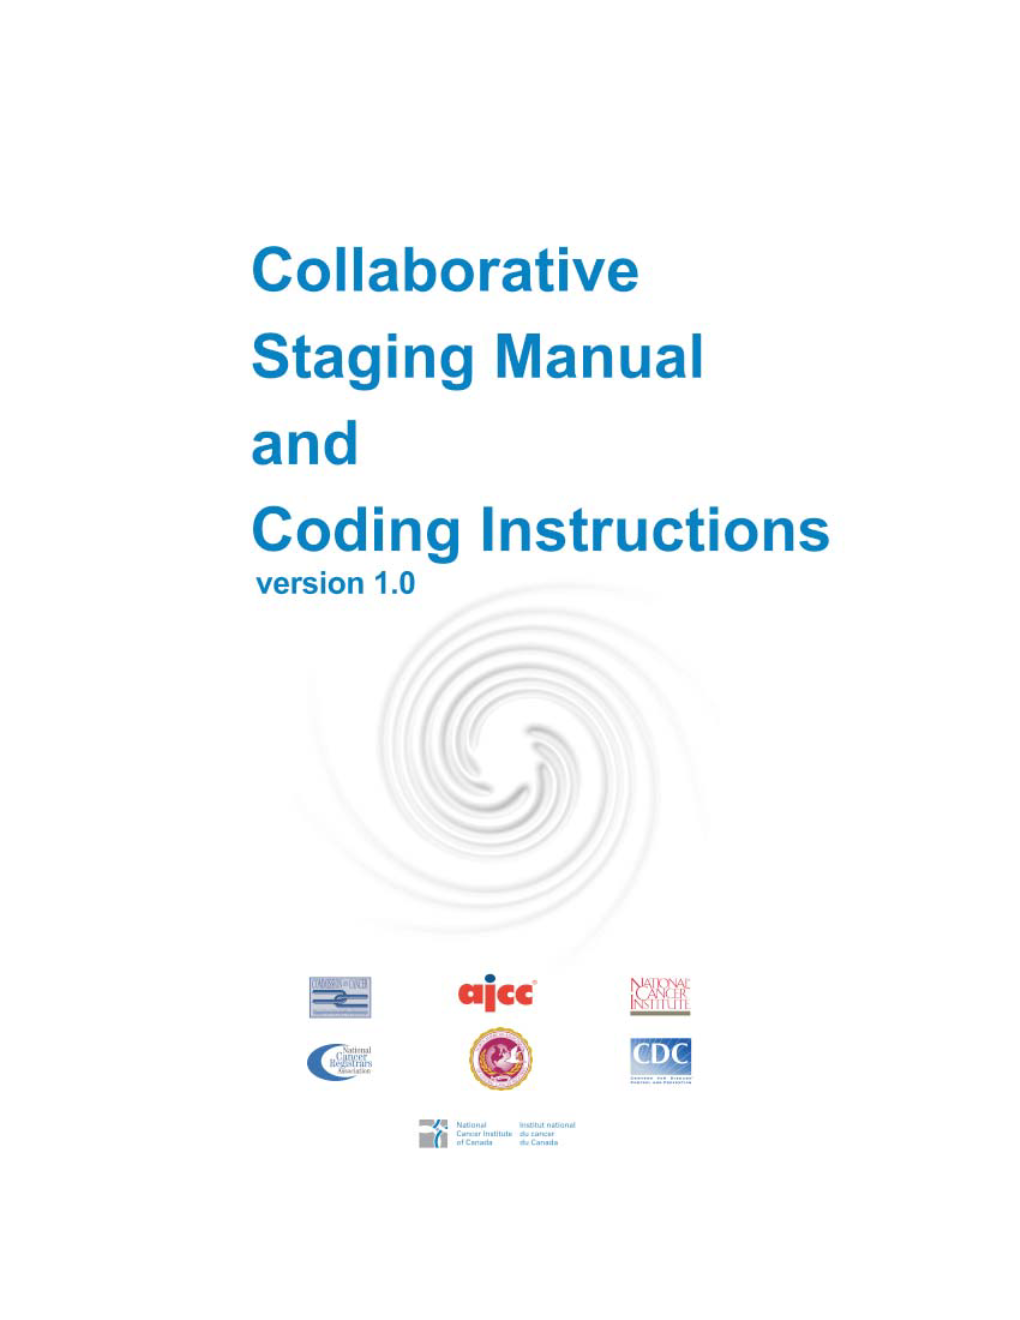 CS Manual and Coding Instructions V0100 Part I and Part II